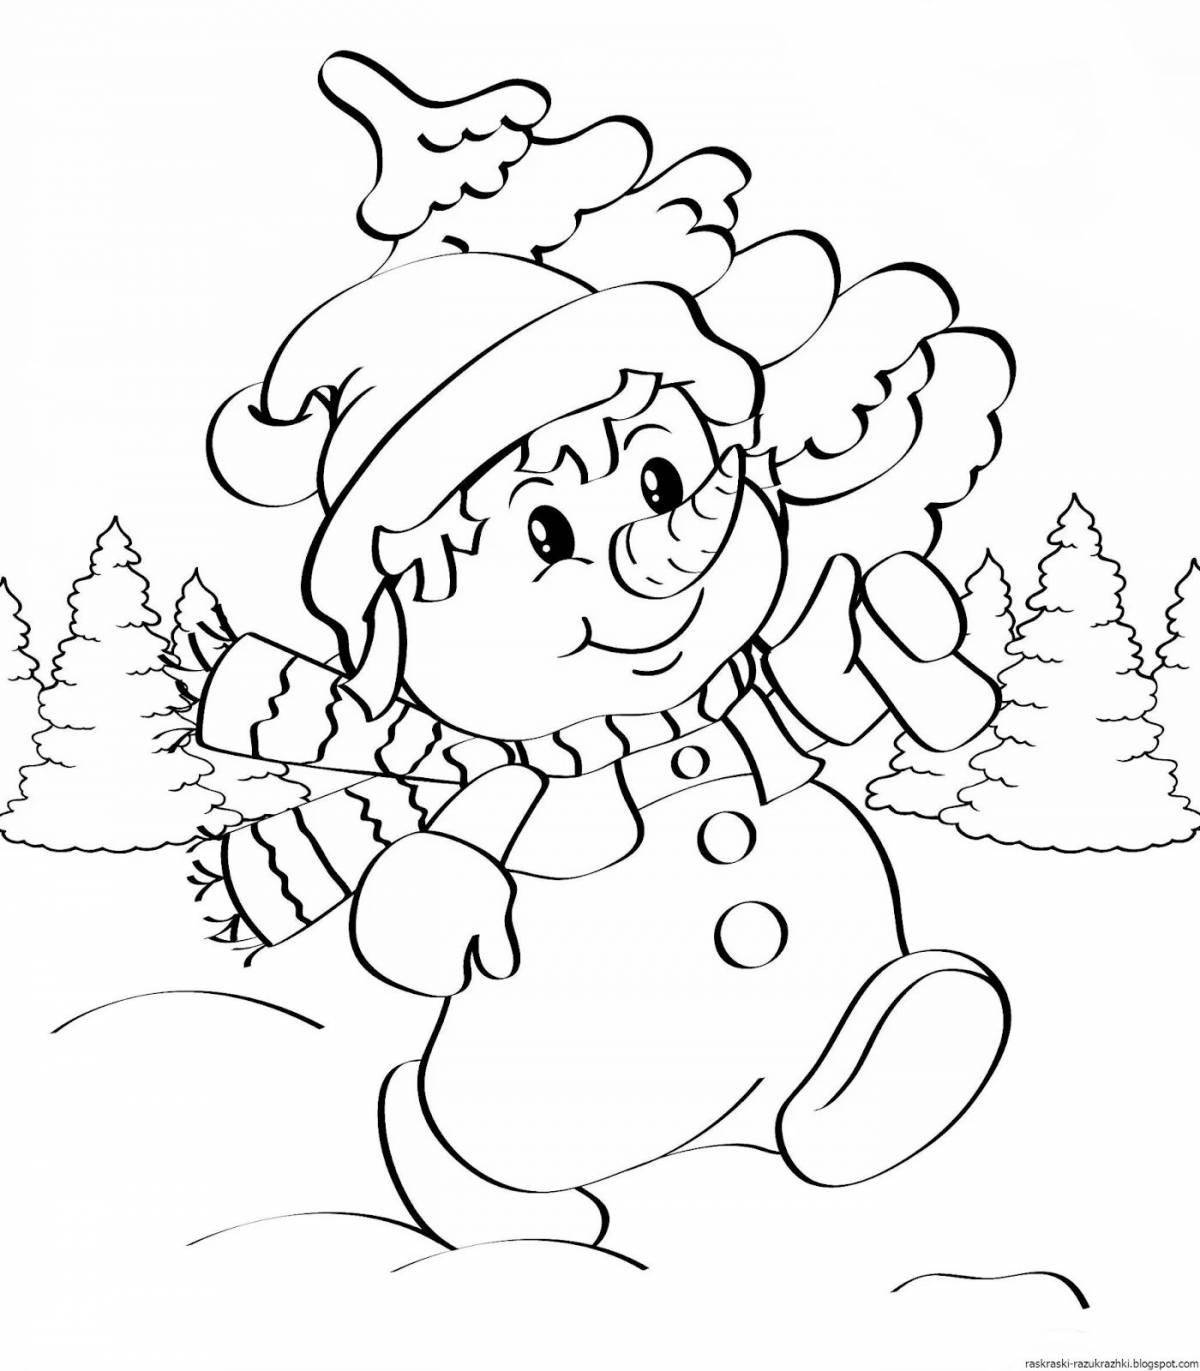 Creative Christmas drawing for kids